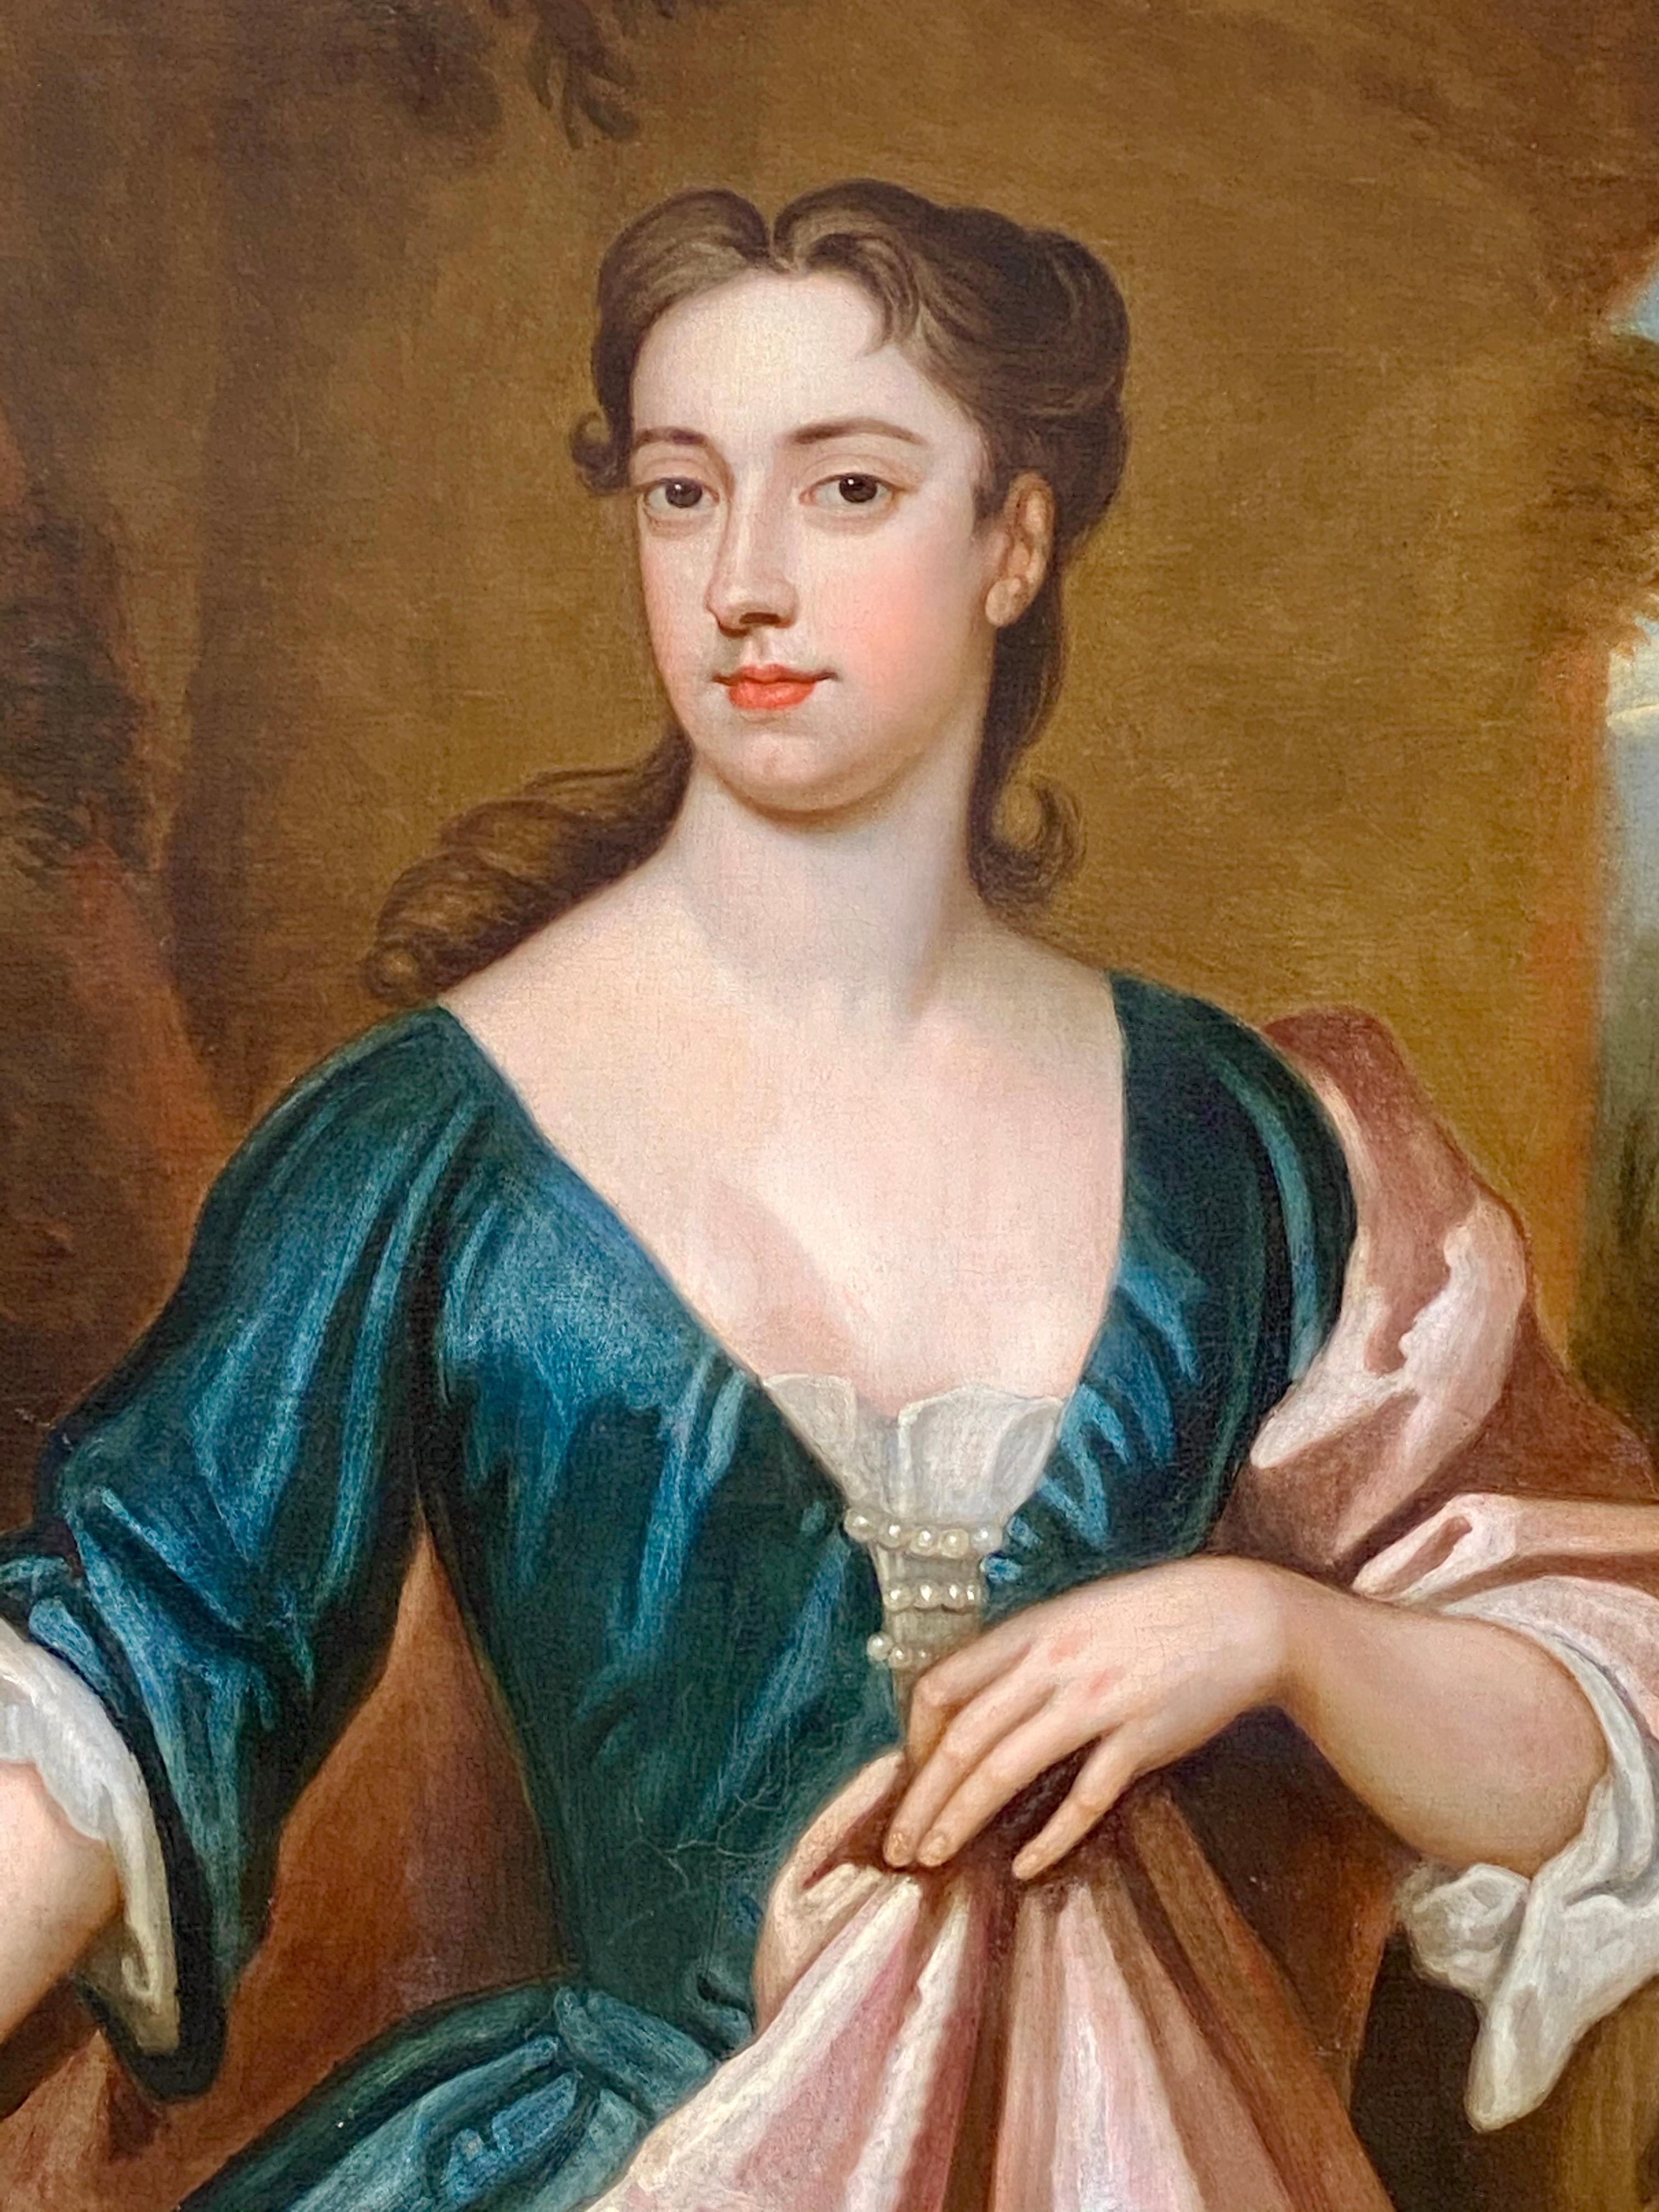 18th century portraits for sale